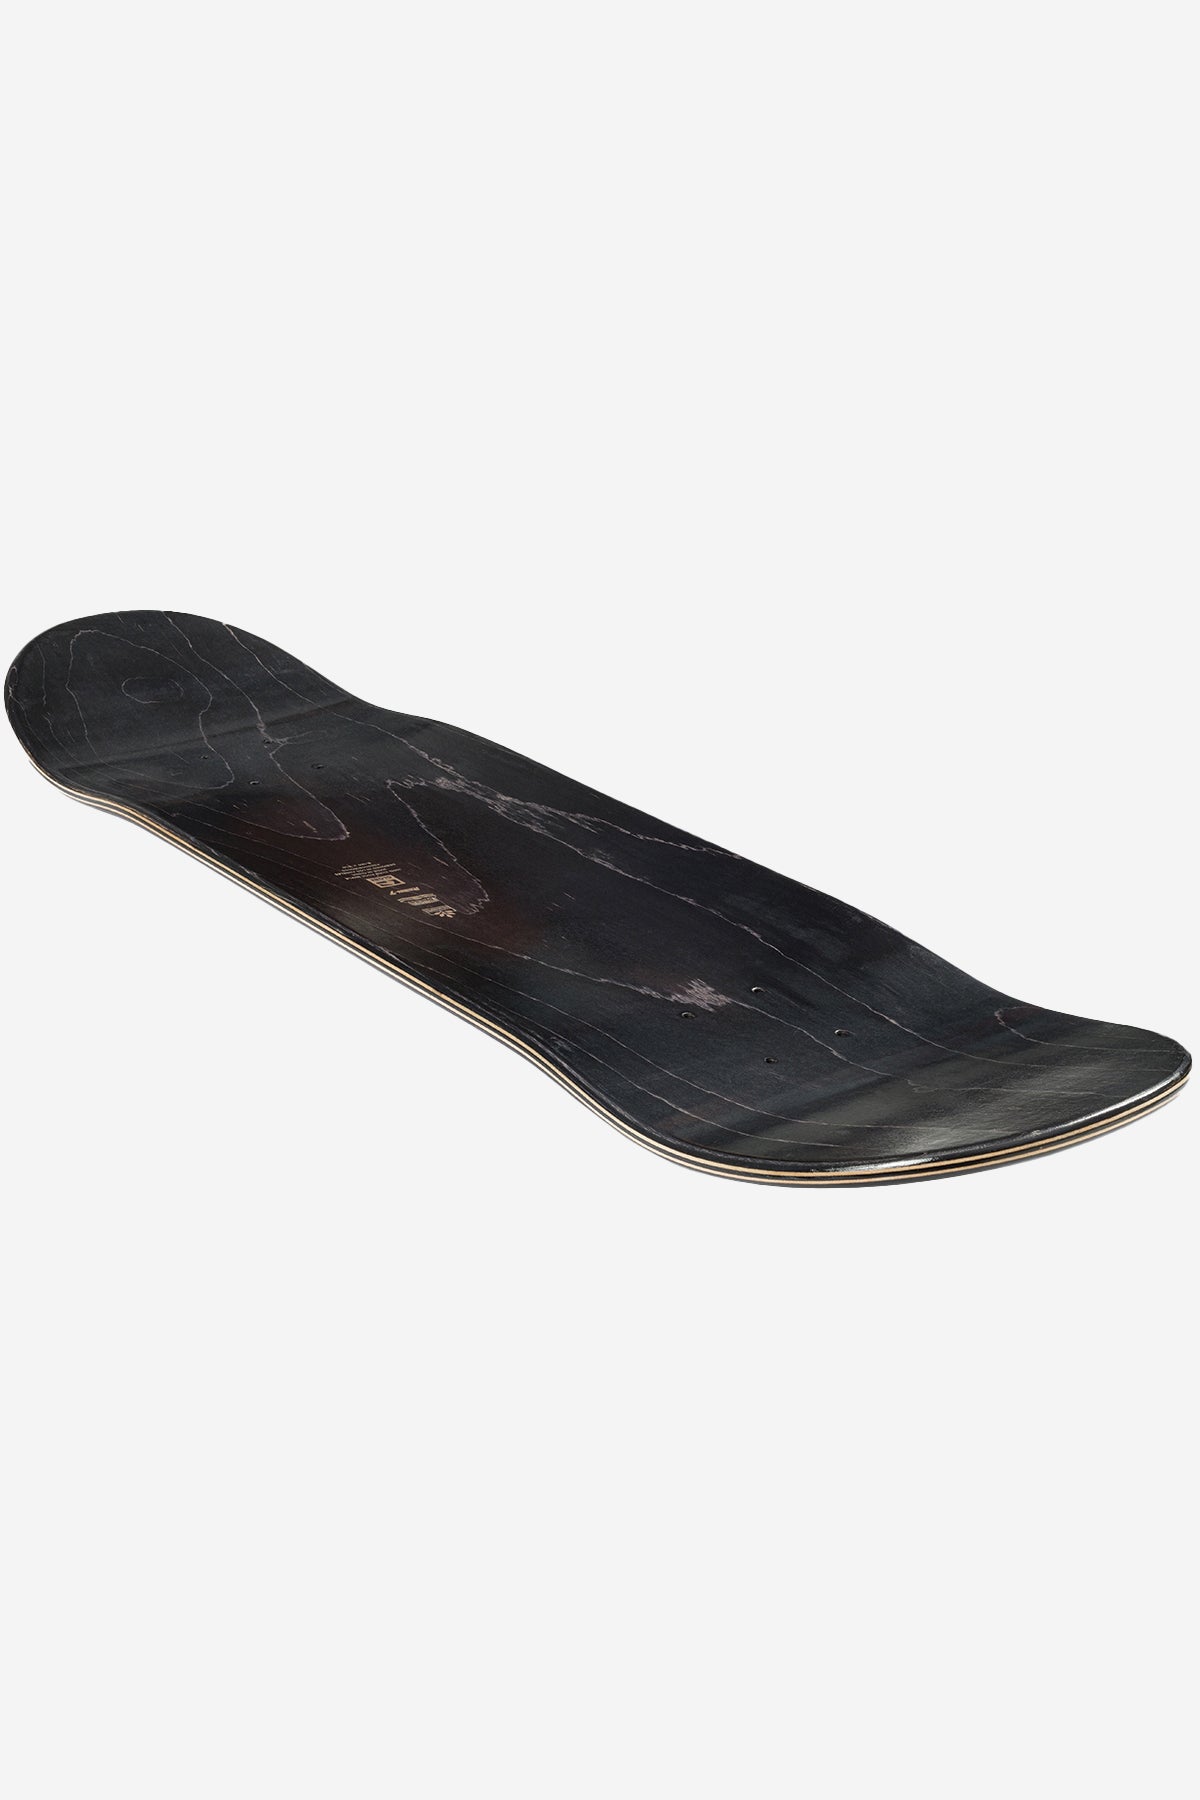 Globe - G1 Argo - Noir Camo - 8.125" Skateboard Deck